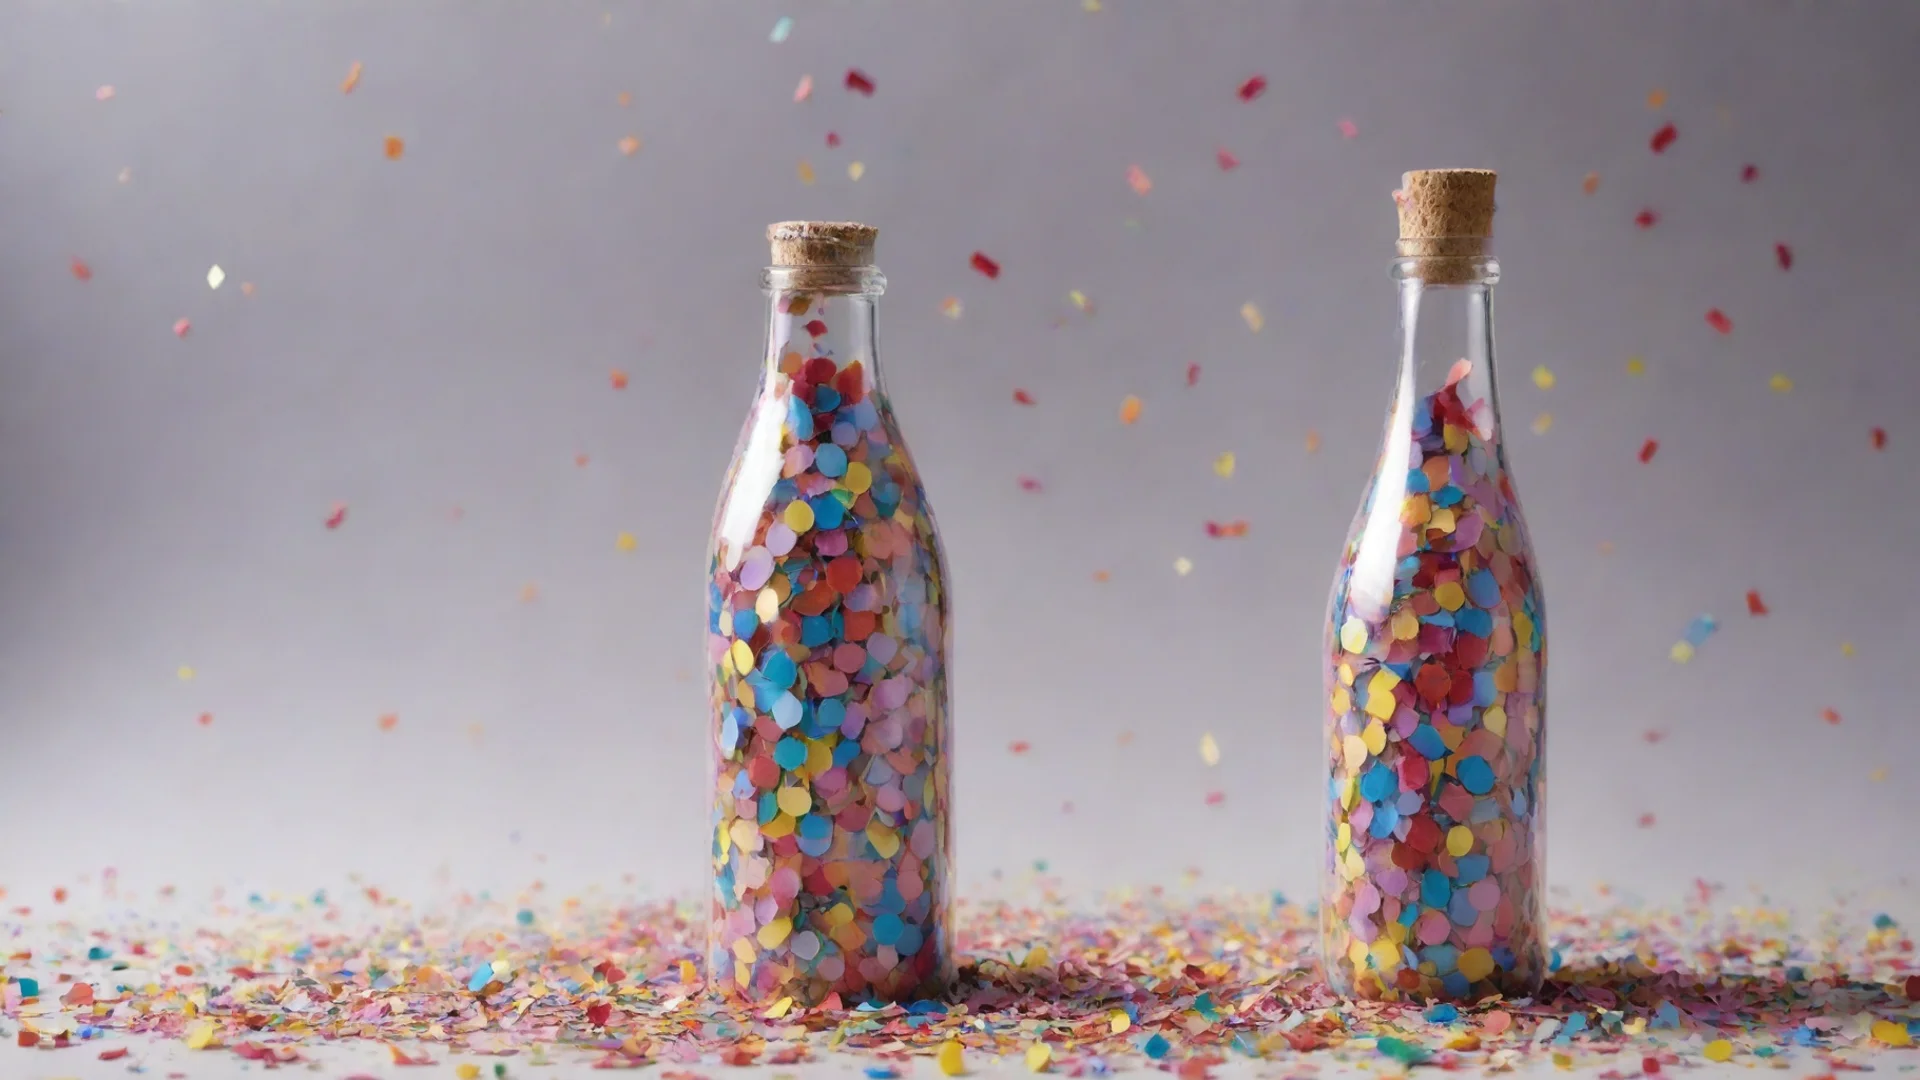 trending epic lovely artistic wind bottle pop confetti amazing celebration wonderful detailed asthetic good looking fantastic 1 wide